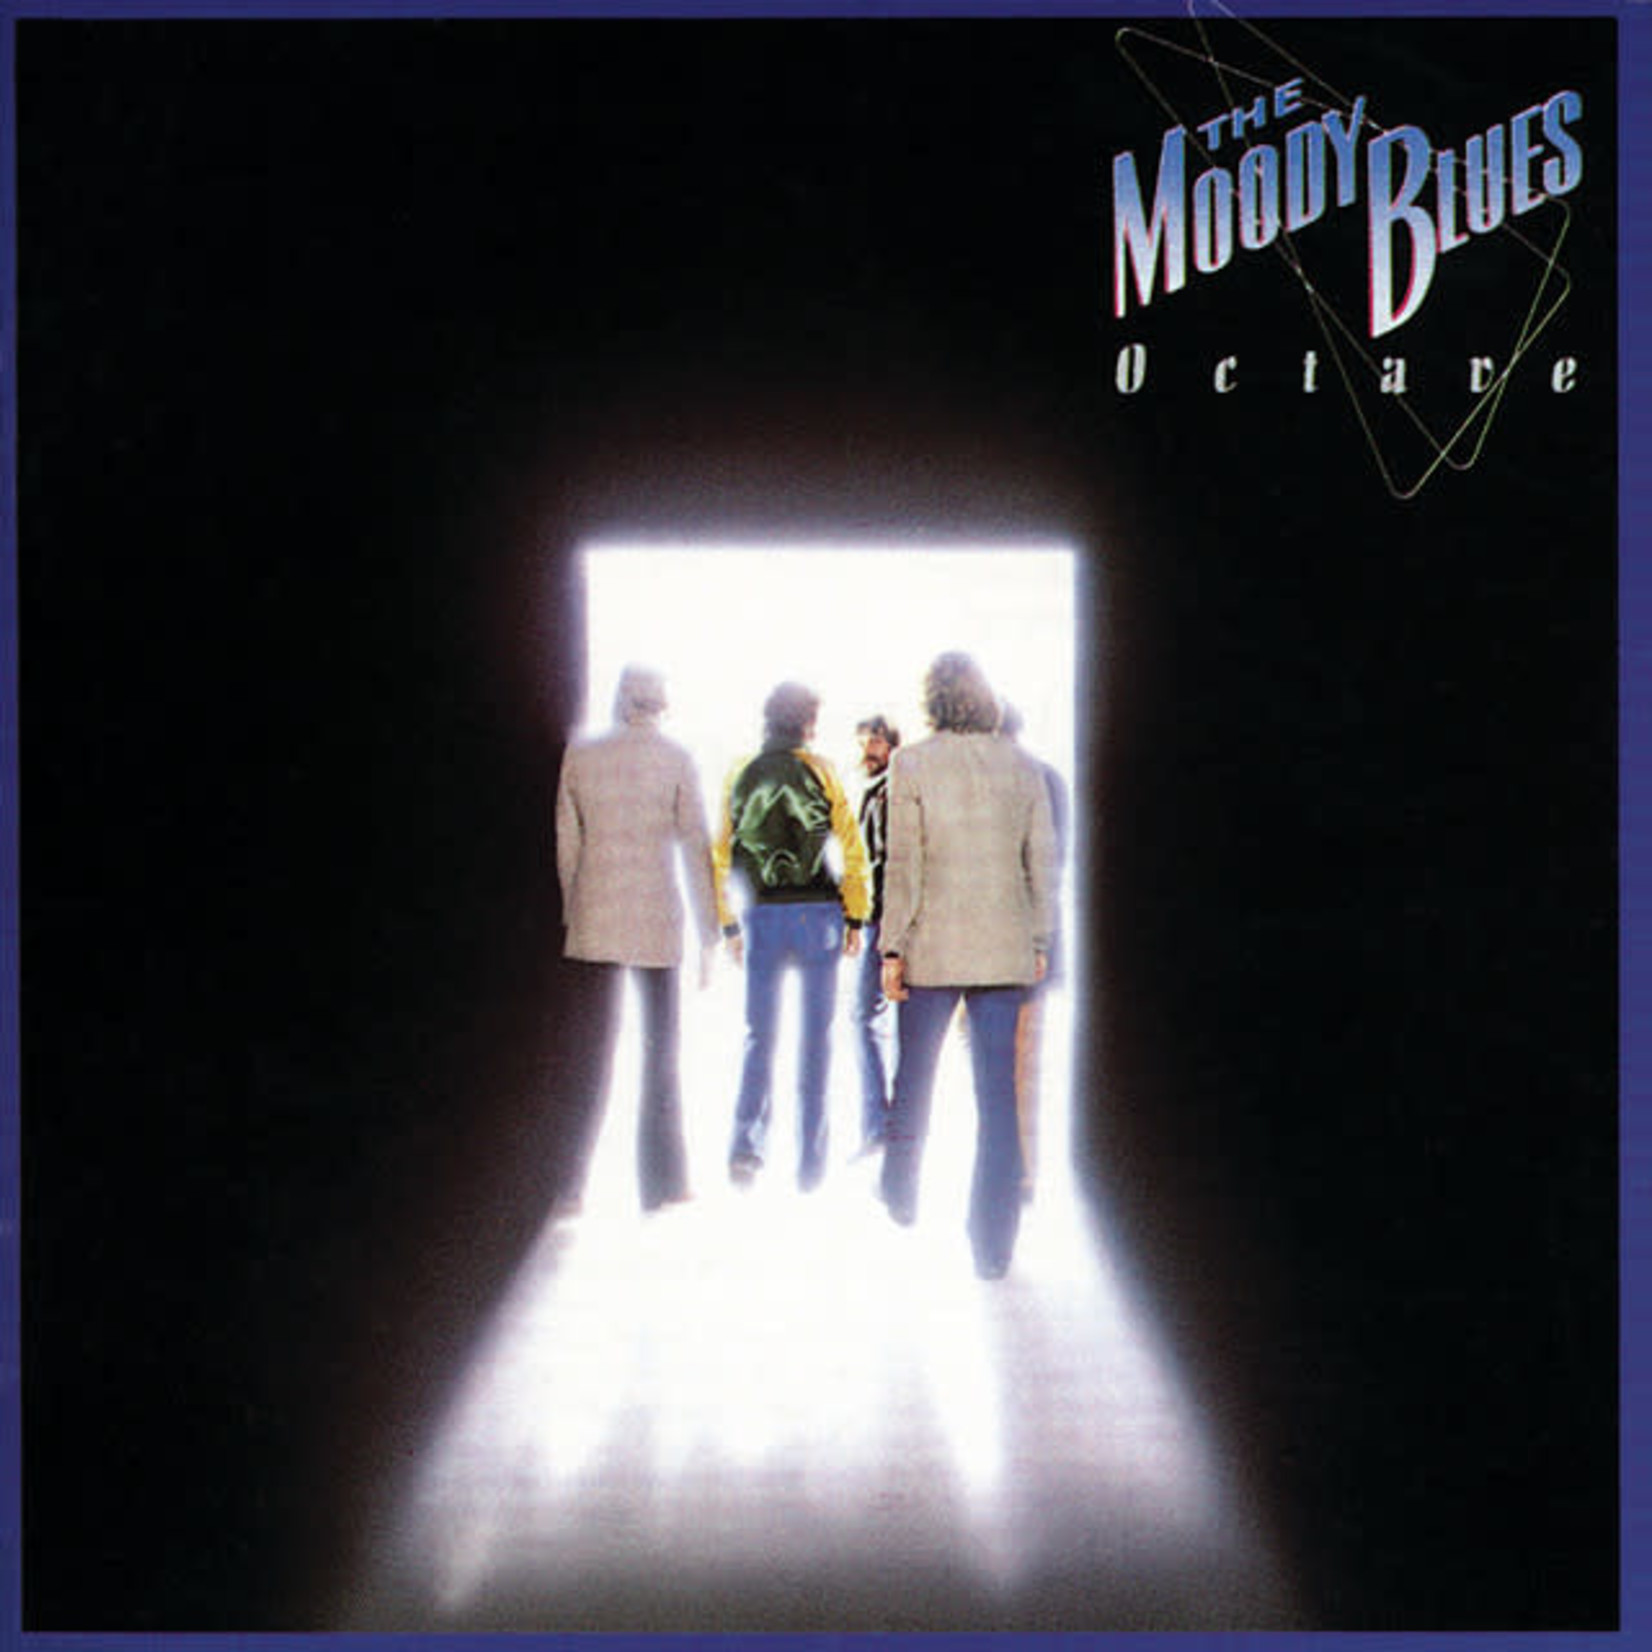 [Vintage] Moody Blues - Octave (black or blue vinyl)